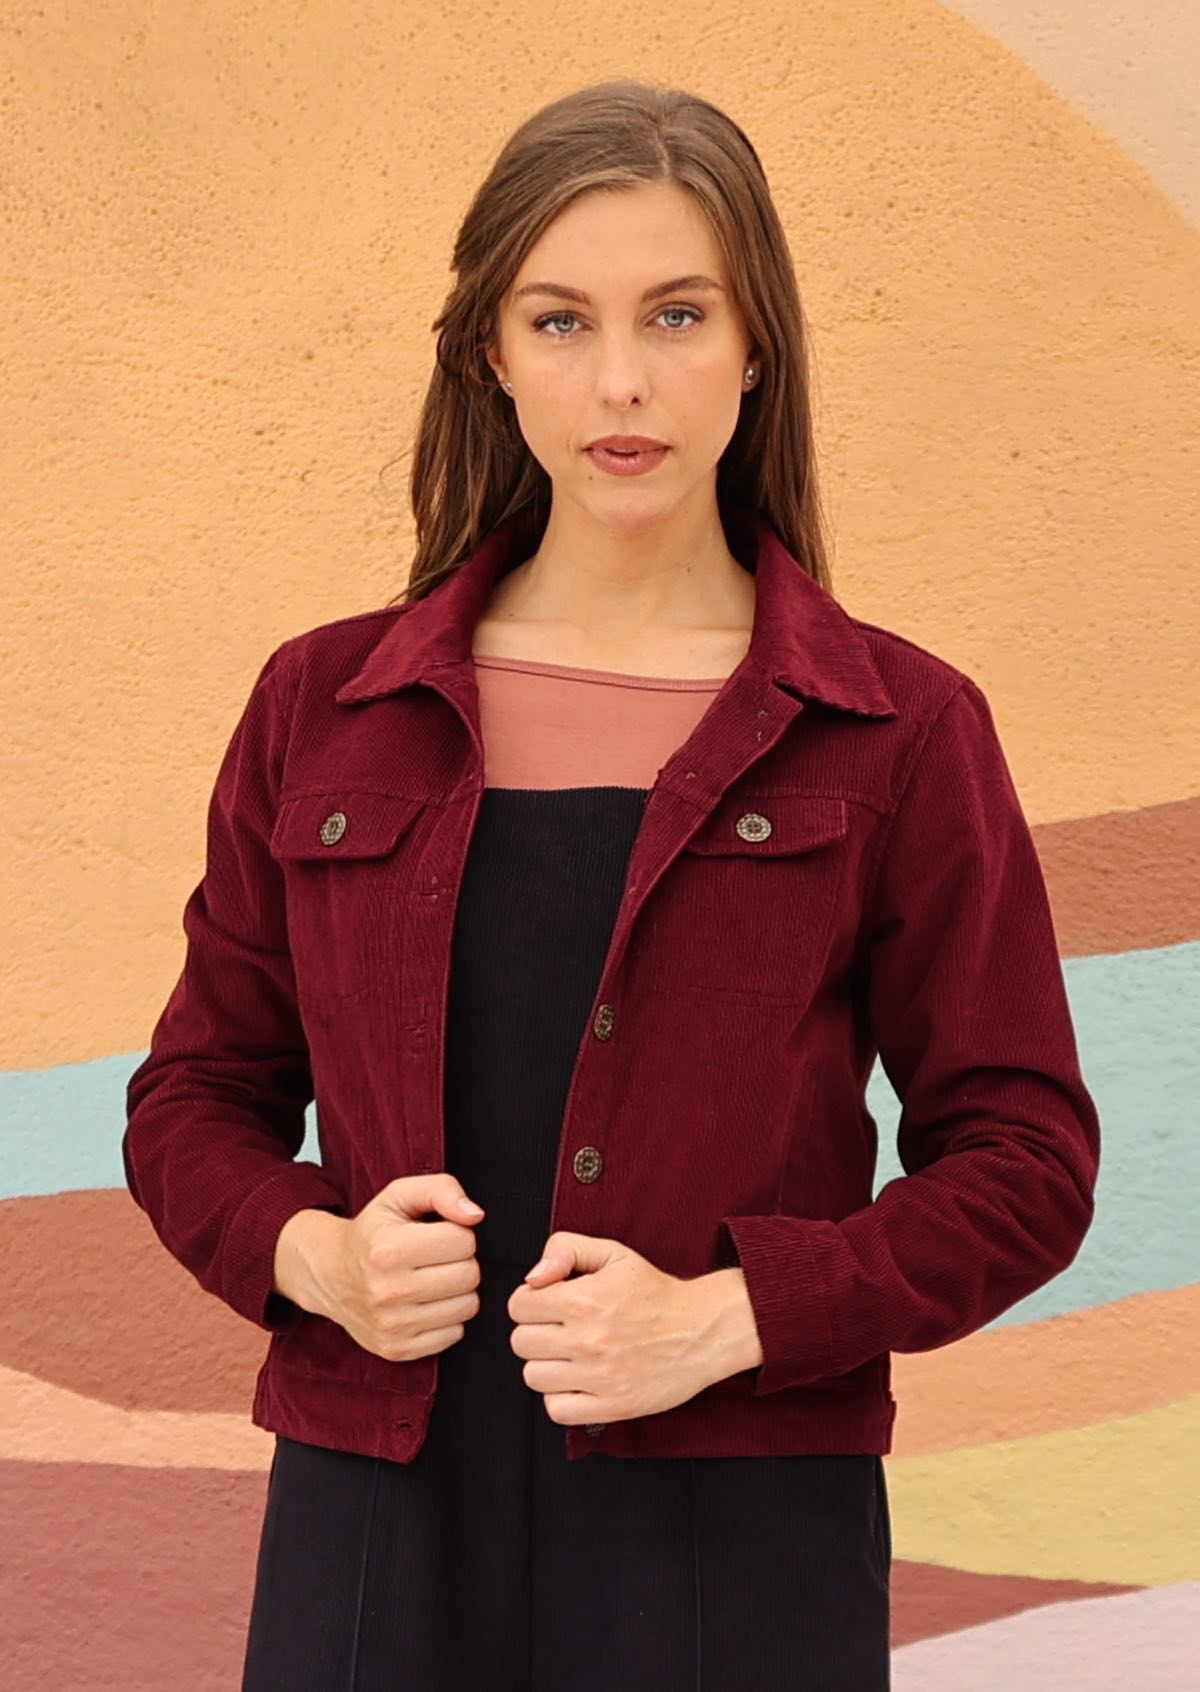 100% cotton corduroy jacket in glorious maroon colour